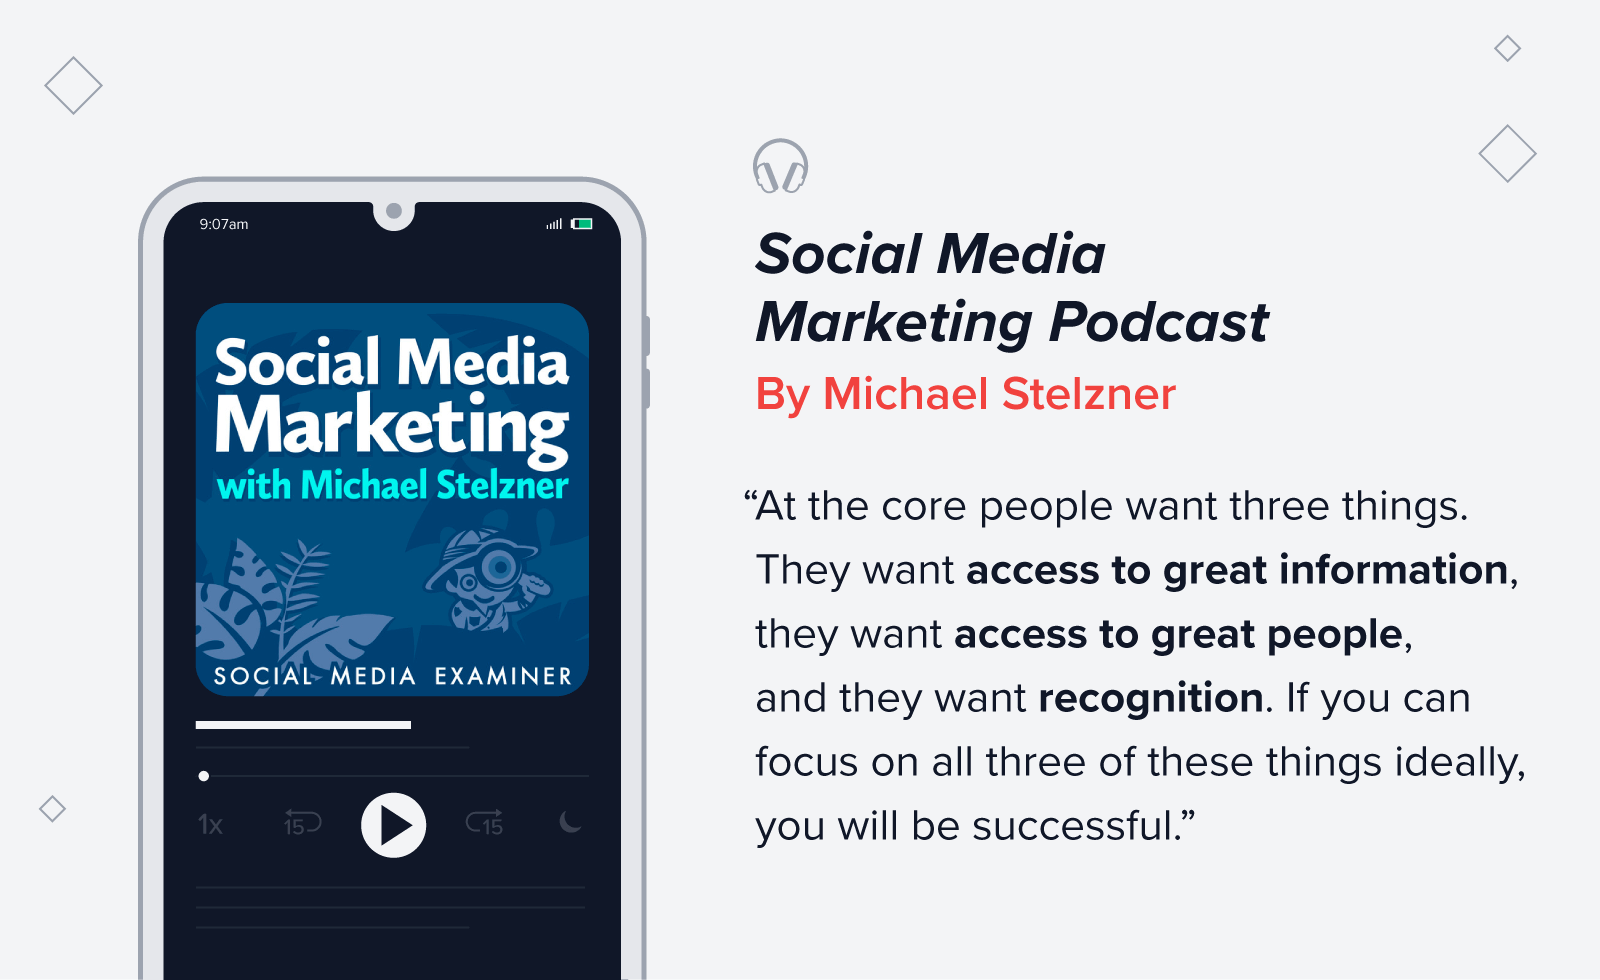 Social Media Marketing Podcast quote